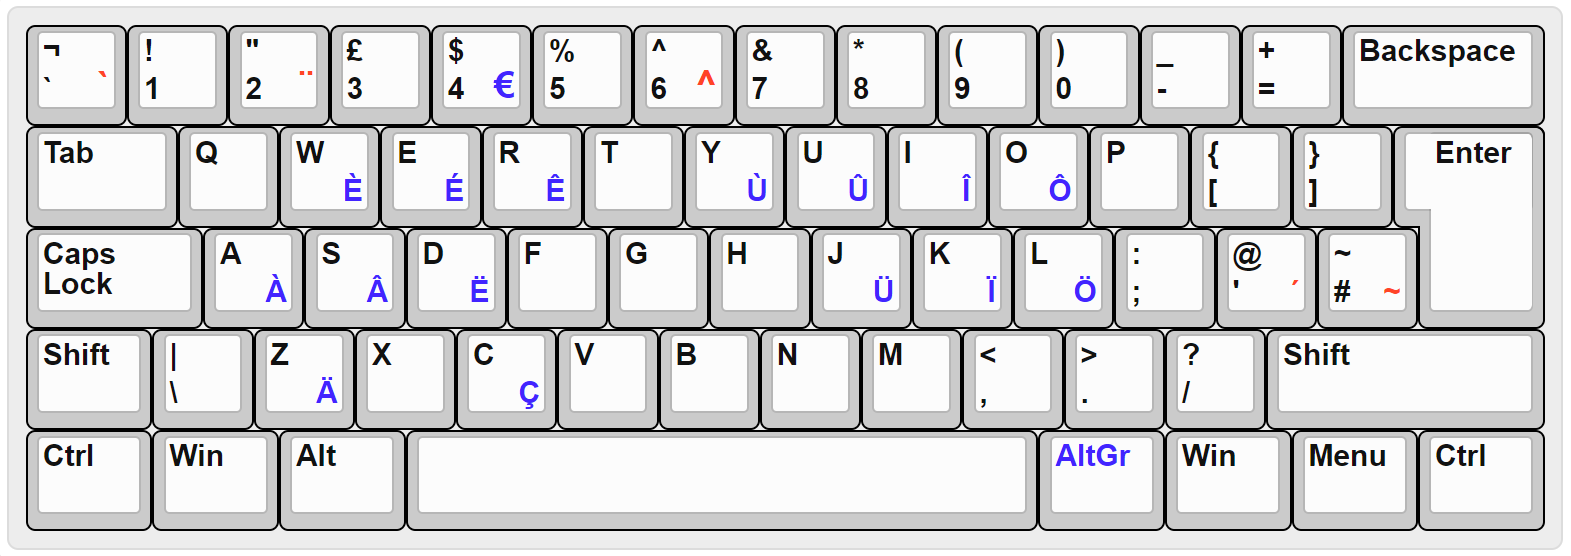 Iso standard keyboard layout - Qasthought